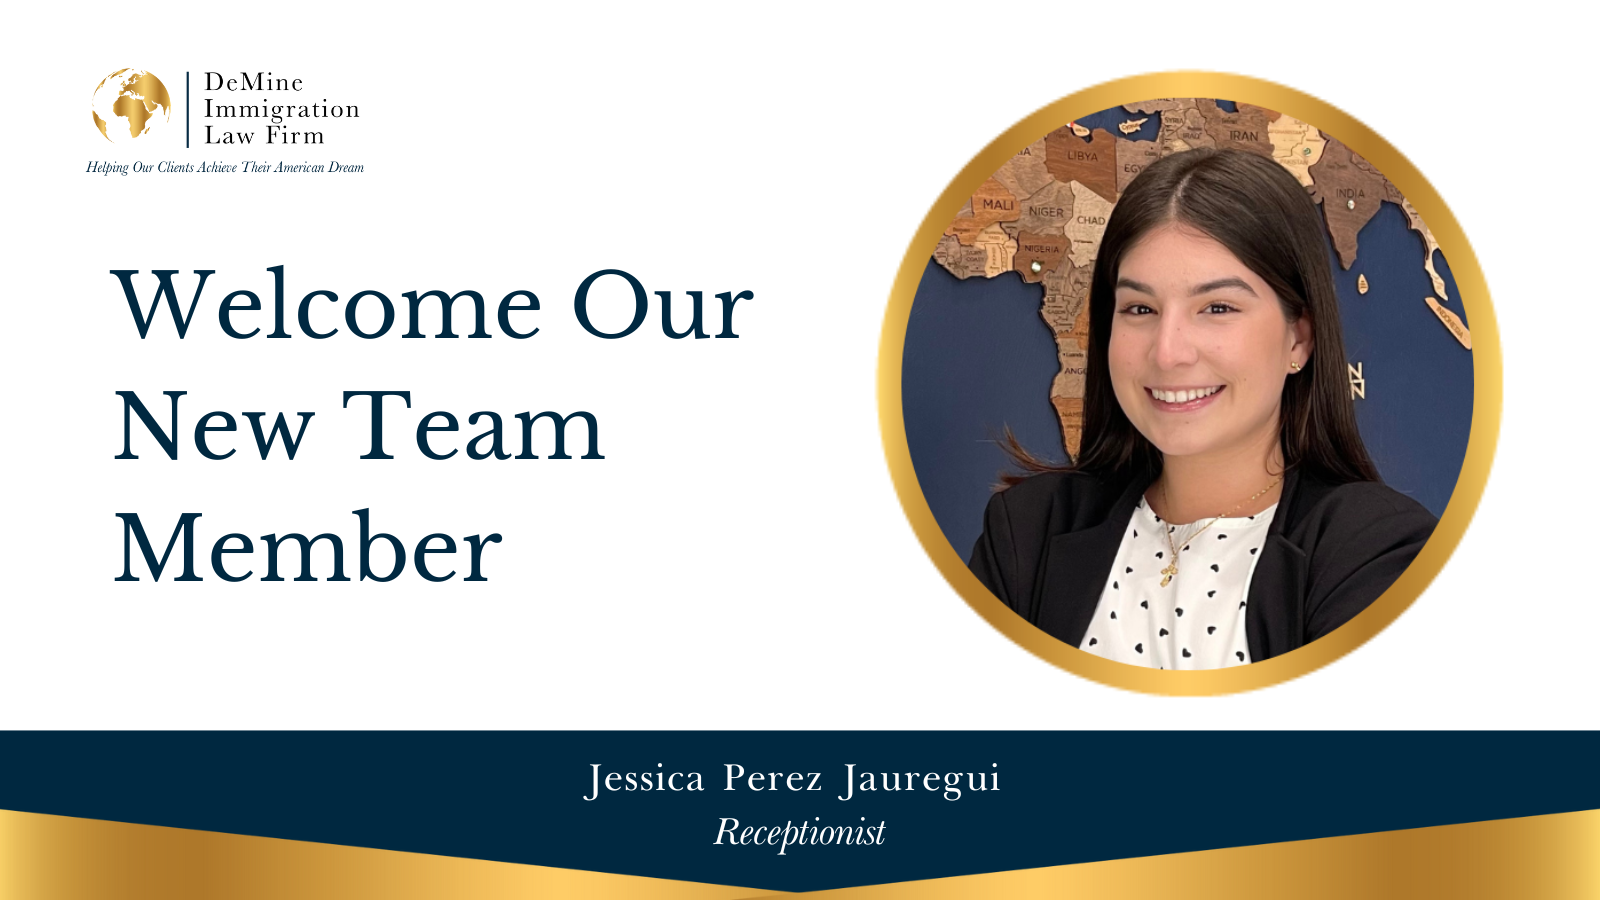 Meet Jessica Perez Jauregui, Our Newest Receptionist at DeMine Immigration Law Firm